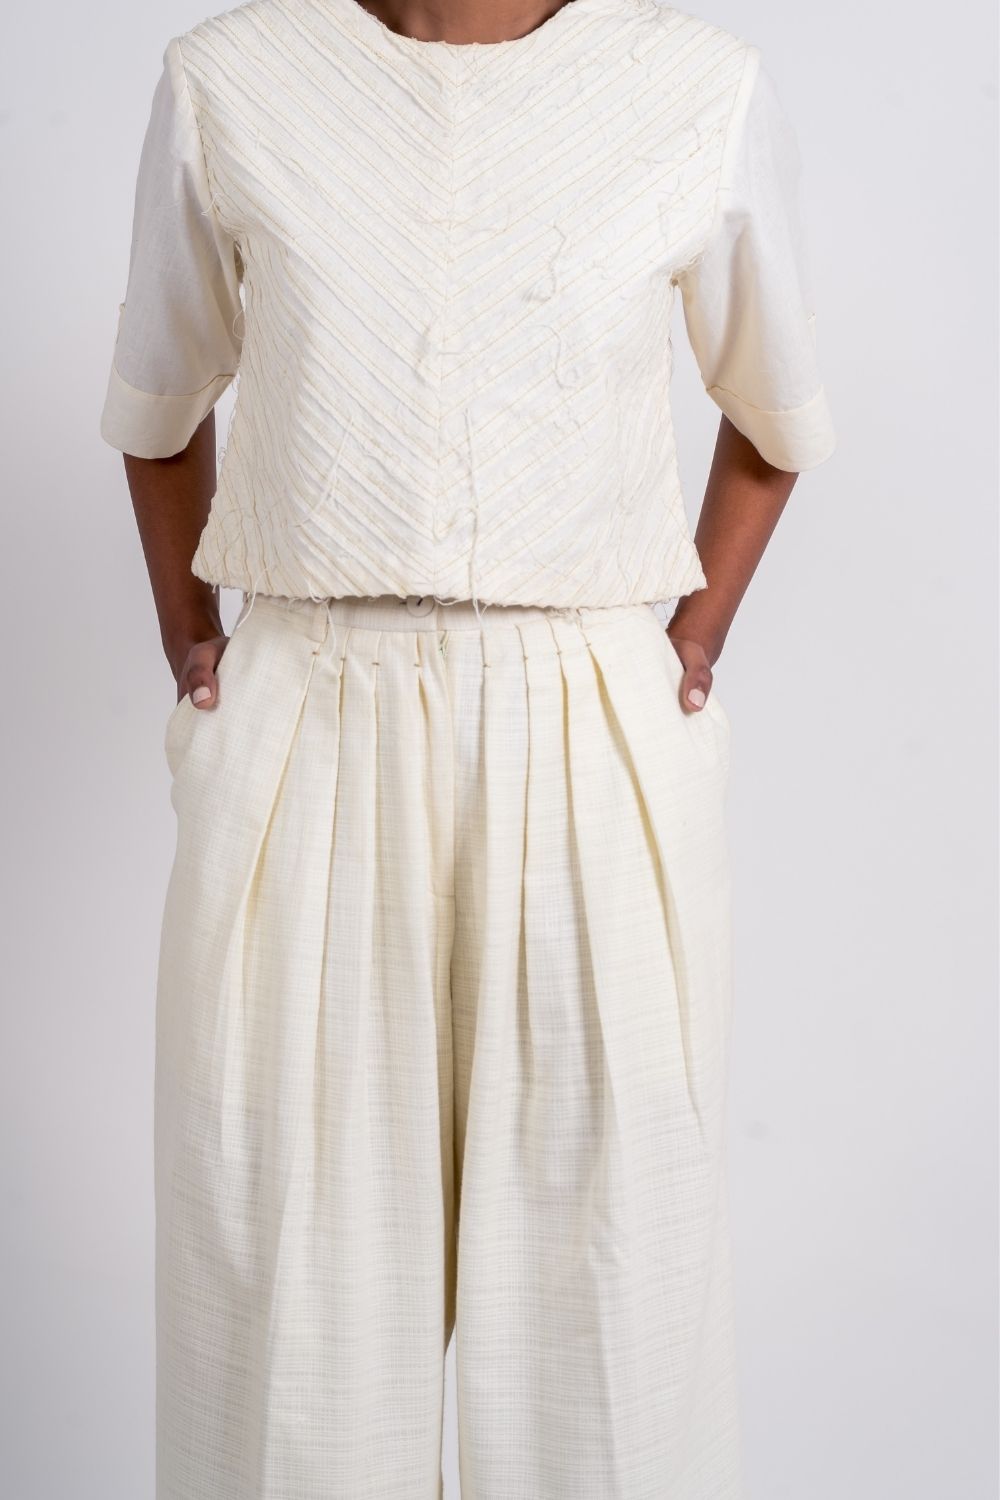 White Textured Crop Top Tops, Handloom Cotton, Natural, Regular Fit, Spaghettis, Textured, Kamakhyaa